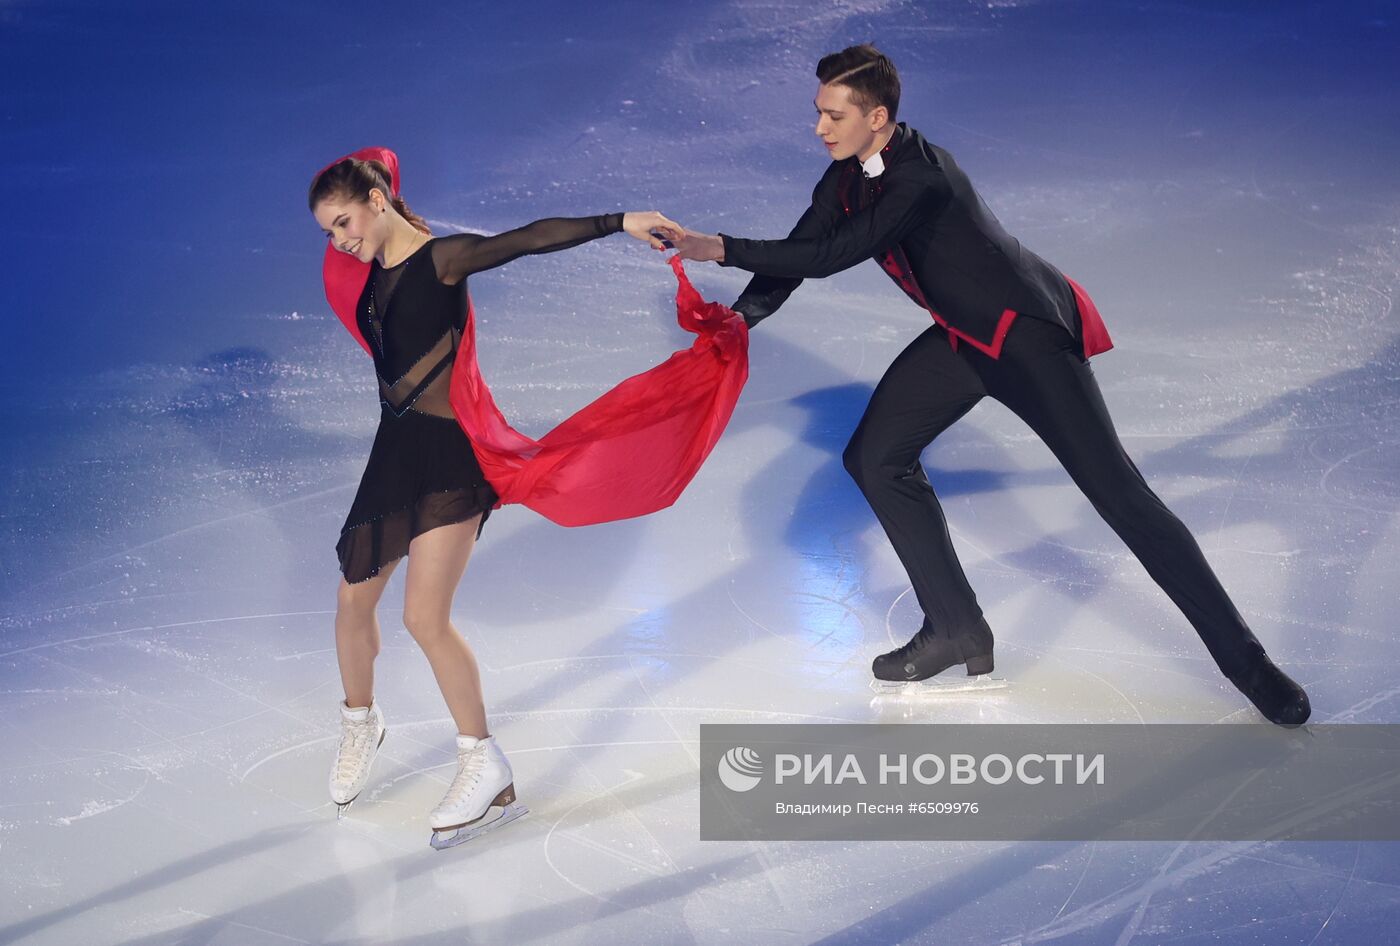 Шоу Team Tutberidze "Чемпионы на льду"